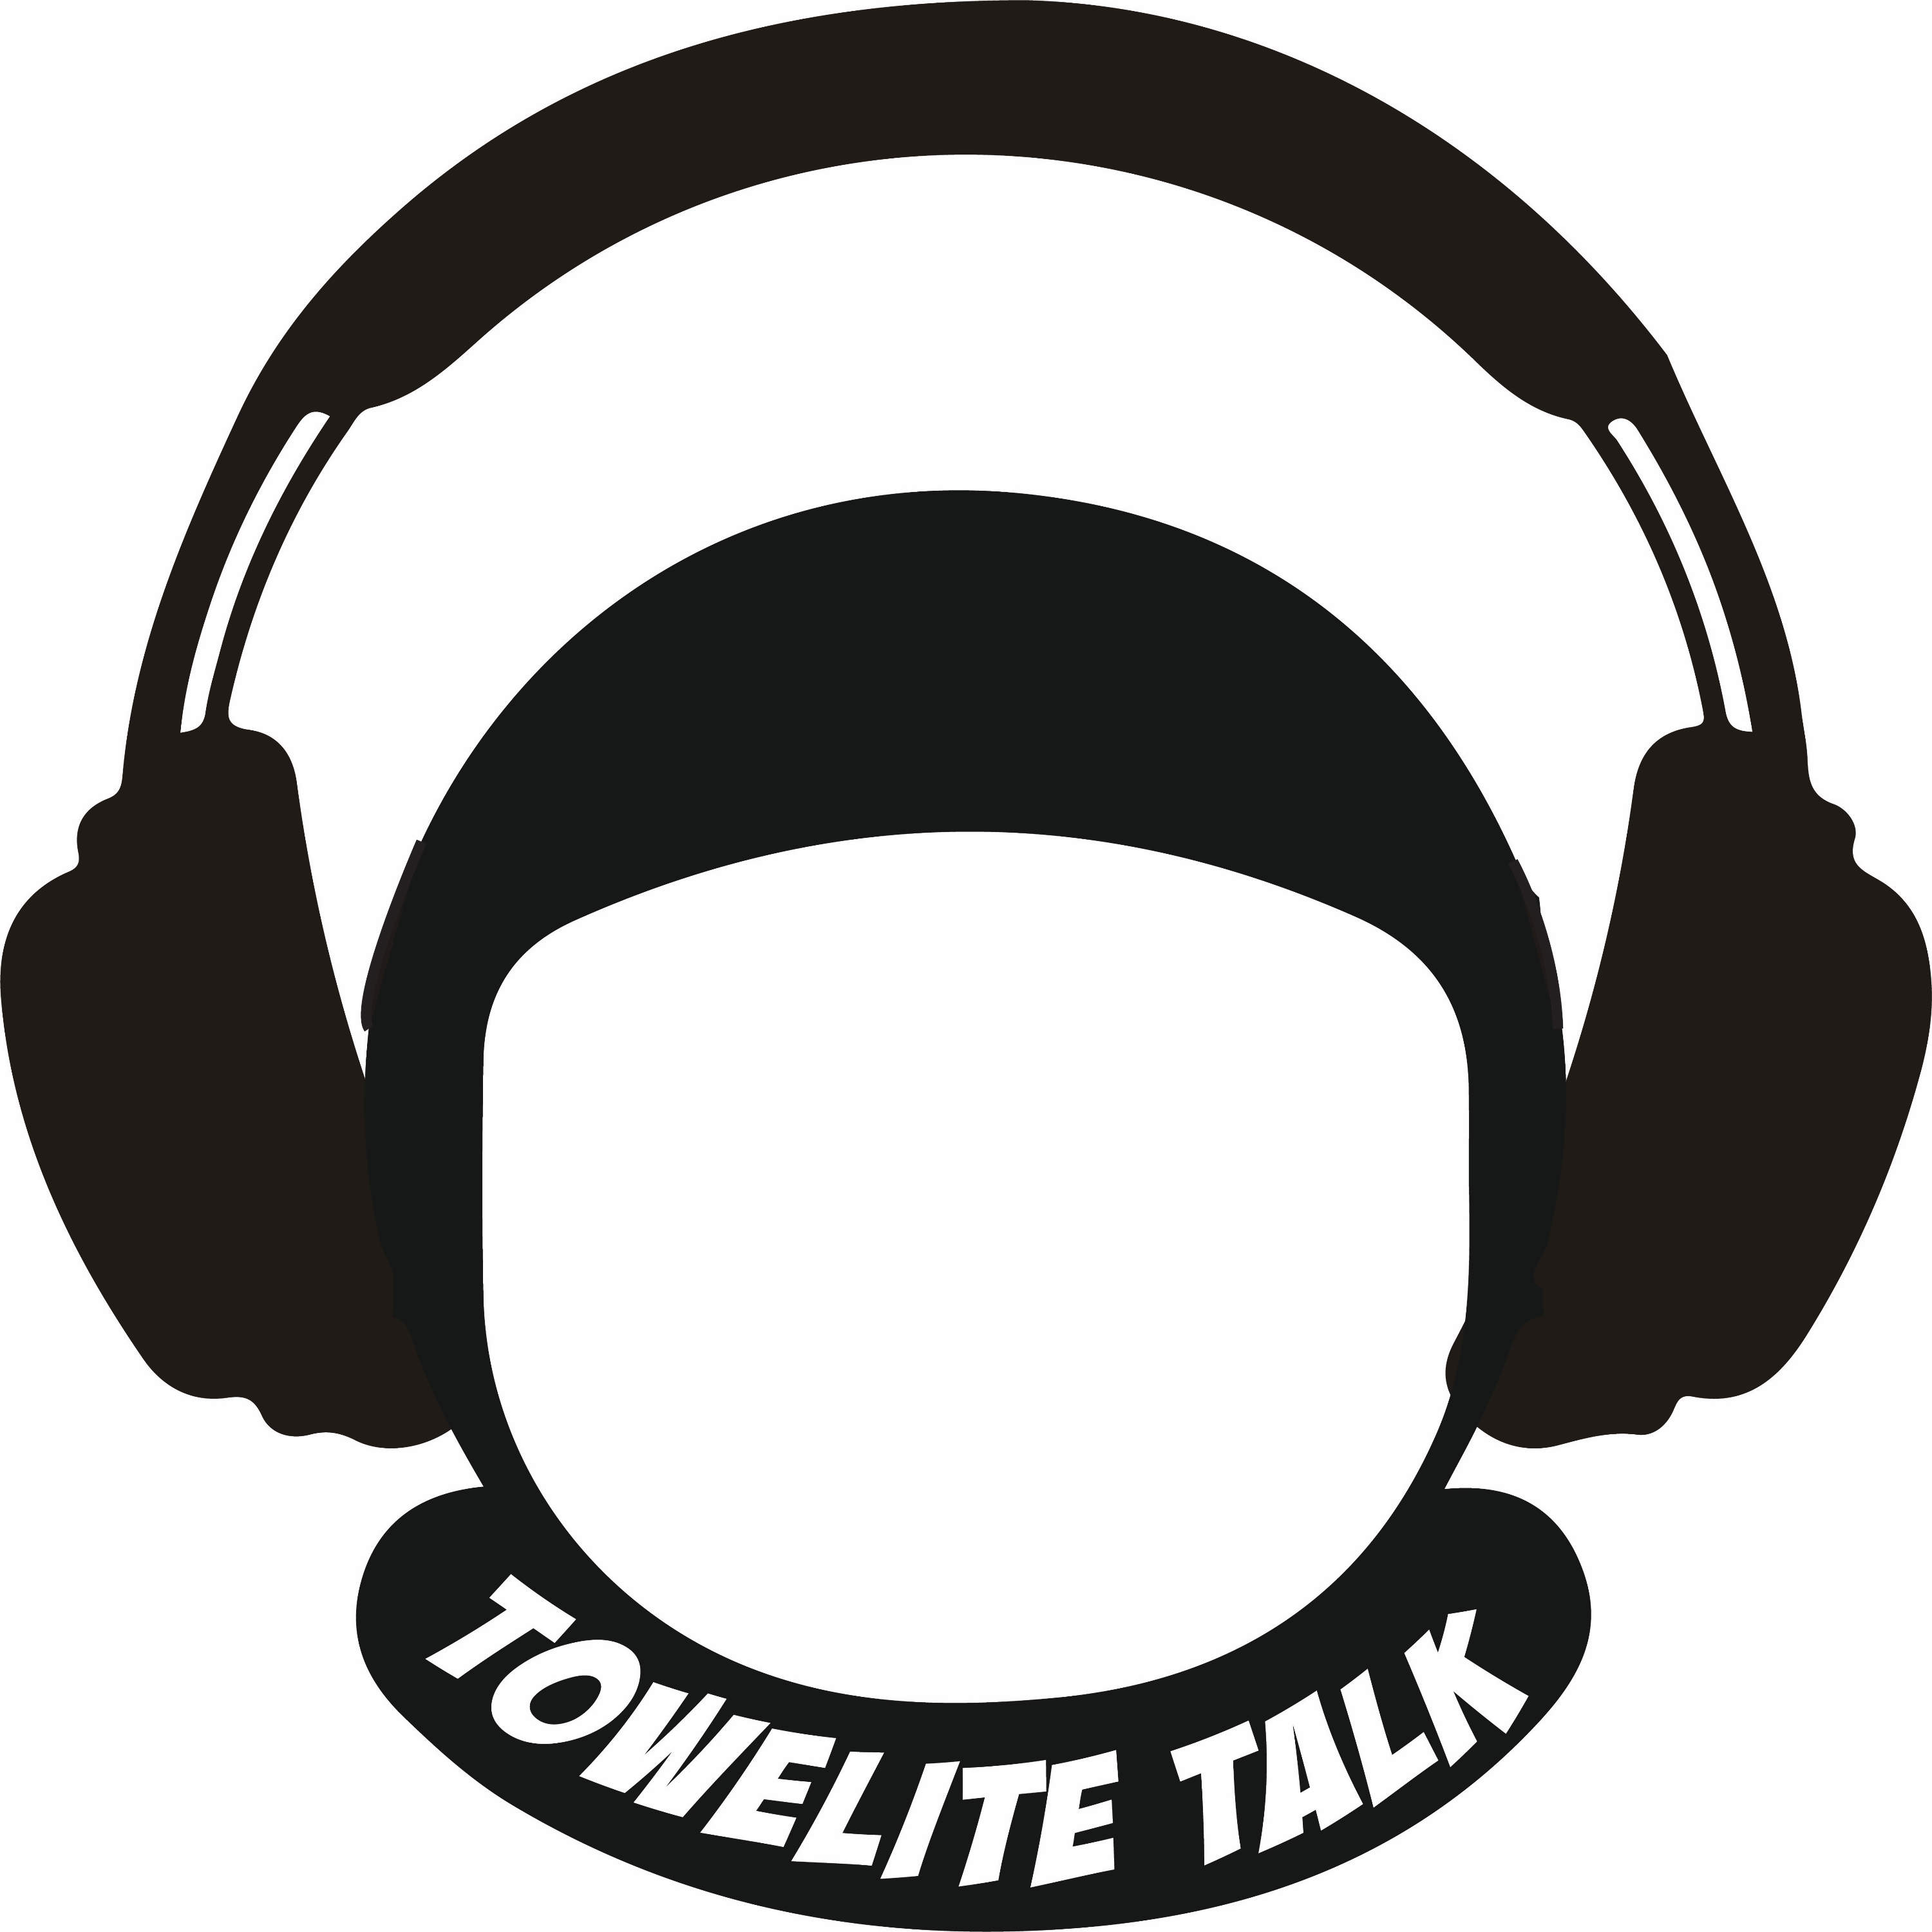 Towelite Talk presents SDCC 2016 Wrap Up